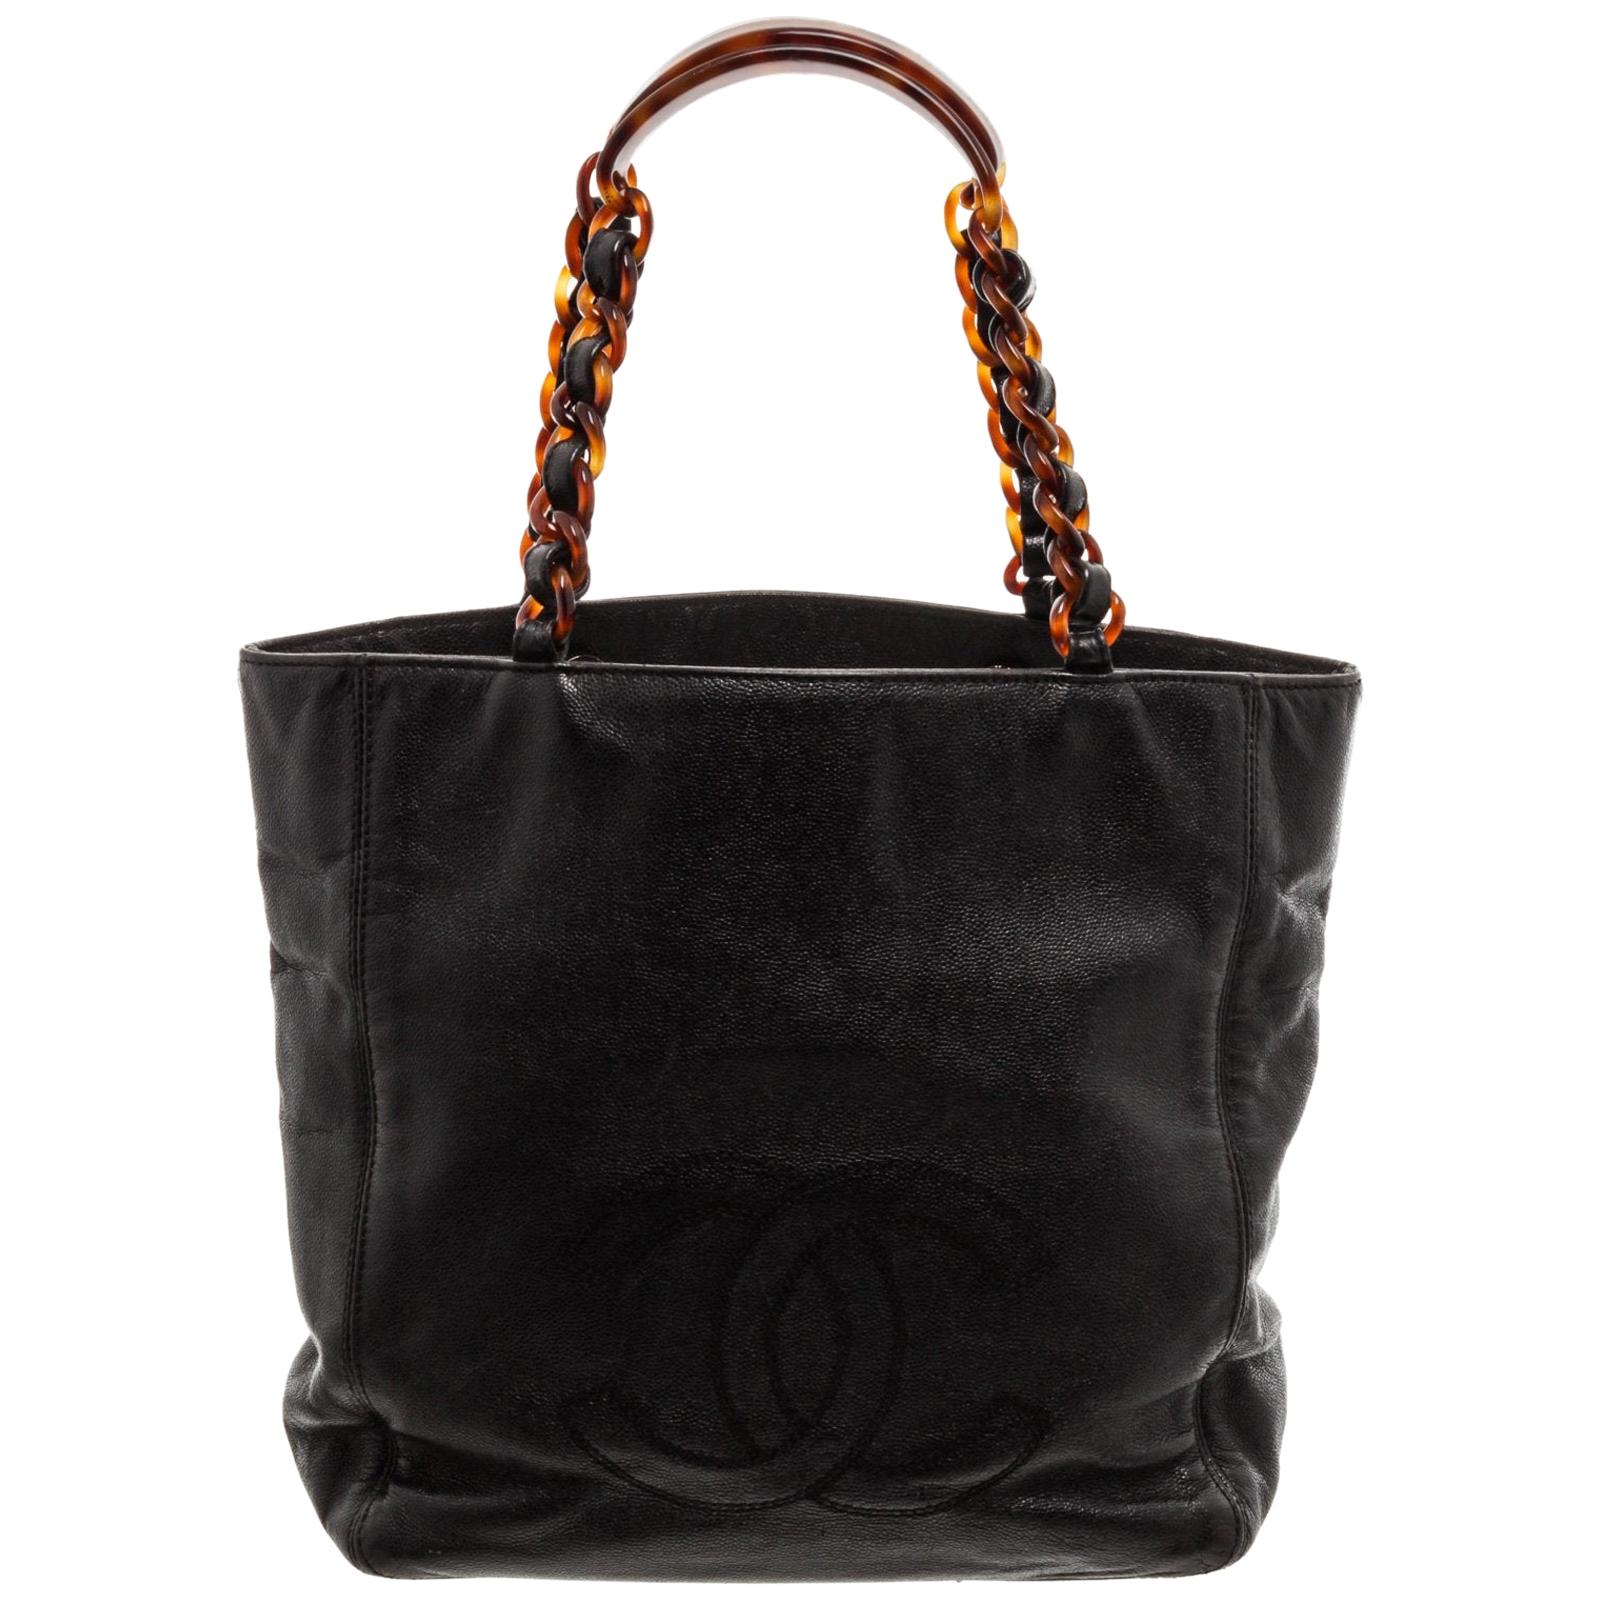 Chanel Black Caviar Leather Tortoise Shell Tote Bag